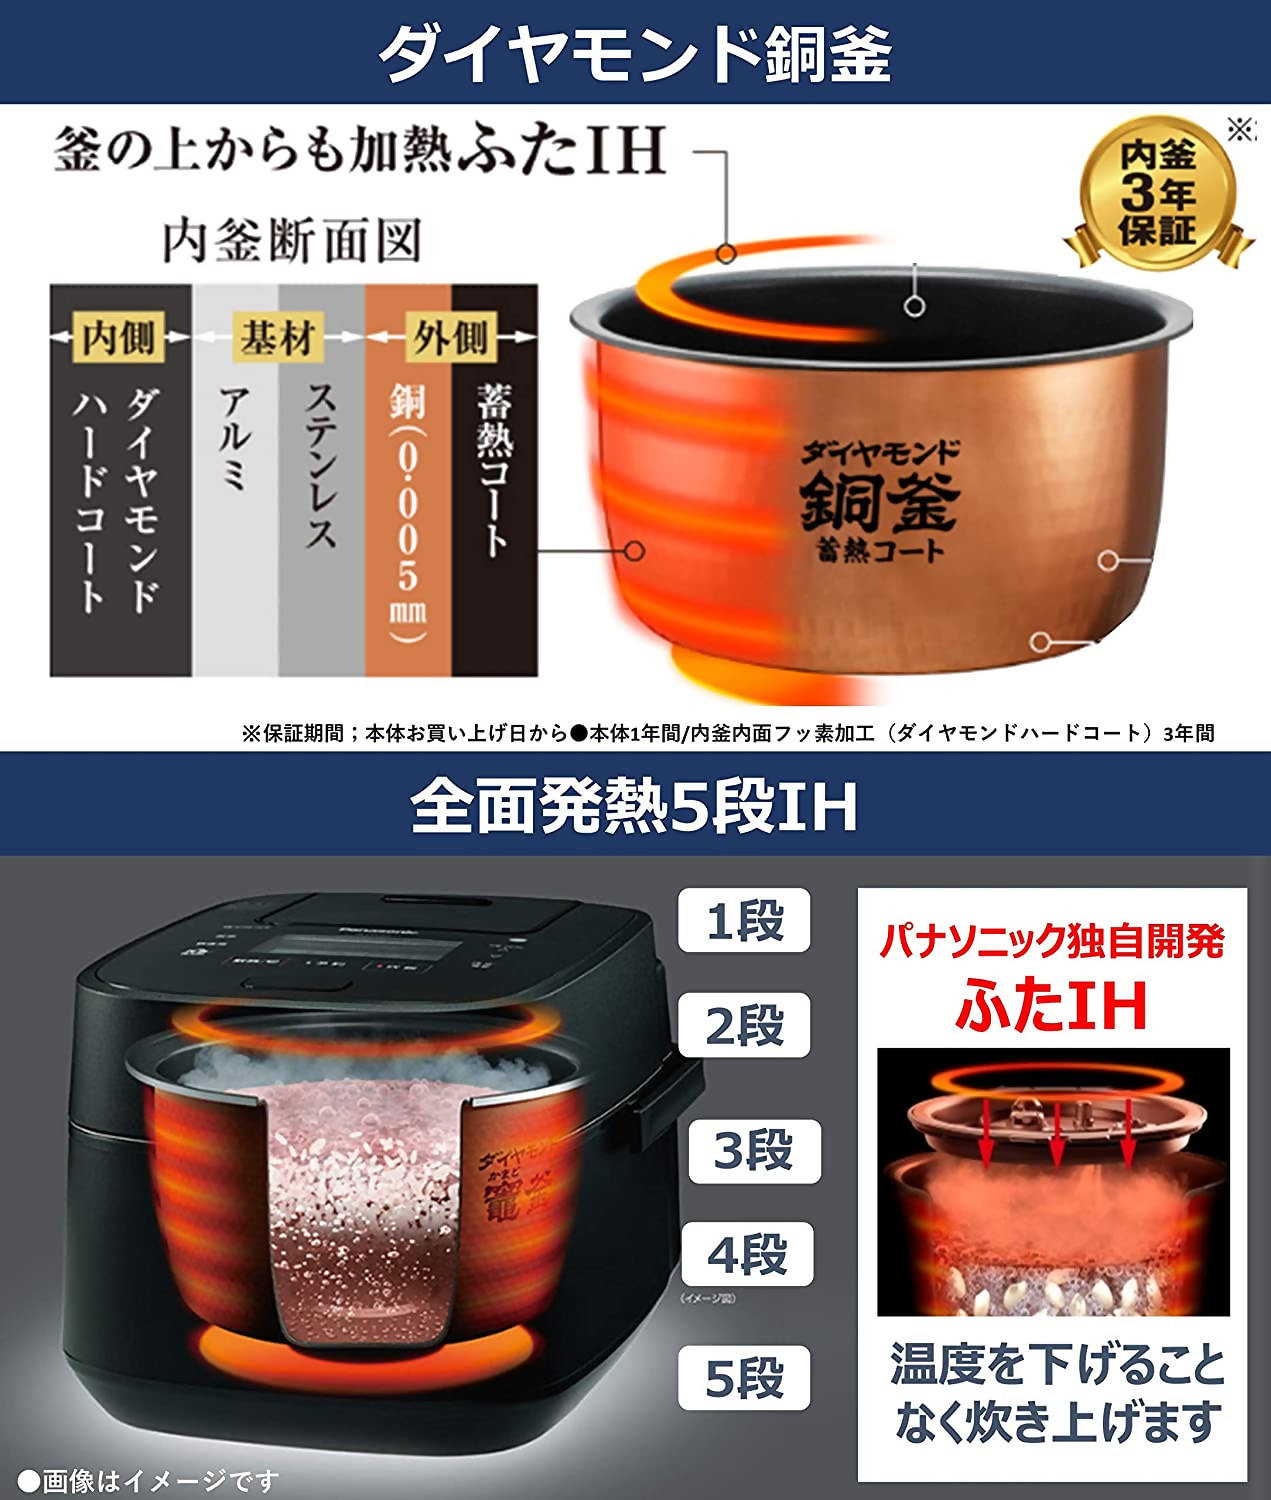 Panasonic SR-HB100-K 5-Stage IH (Induction Rice Cooker – 5.5 – Allegro Japan